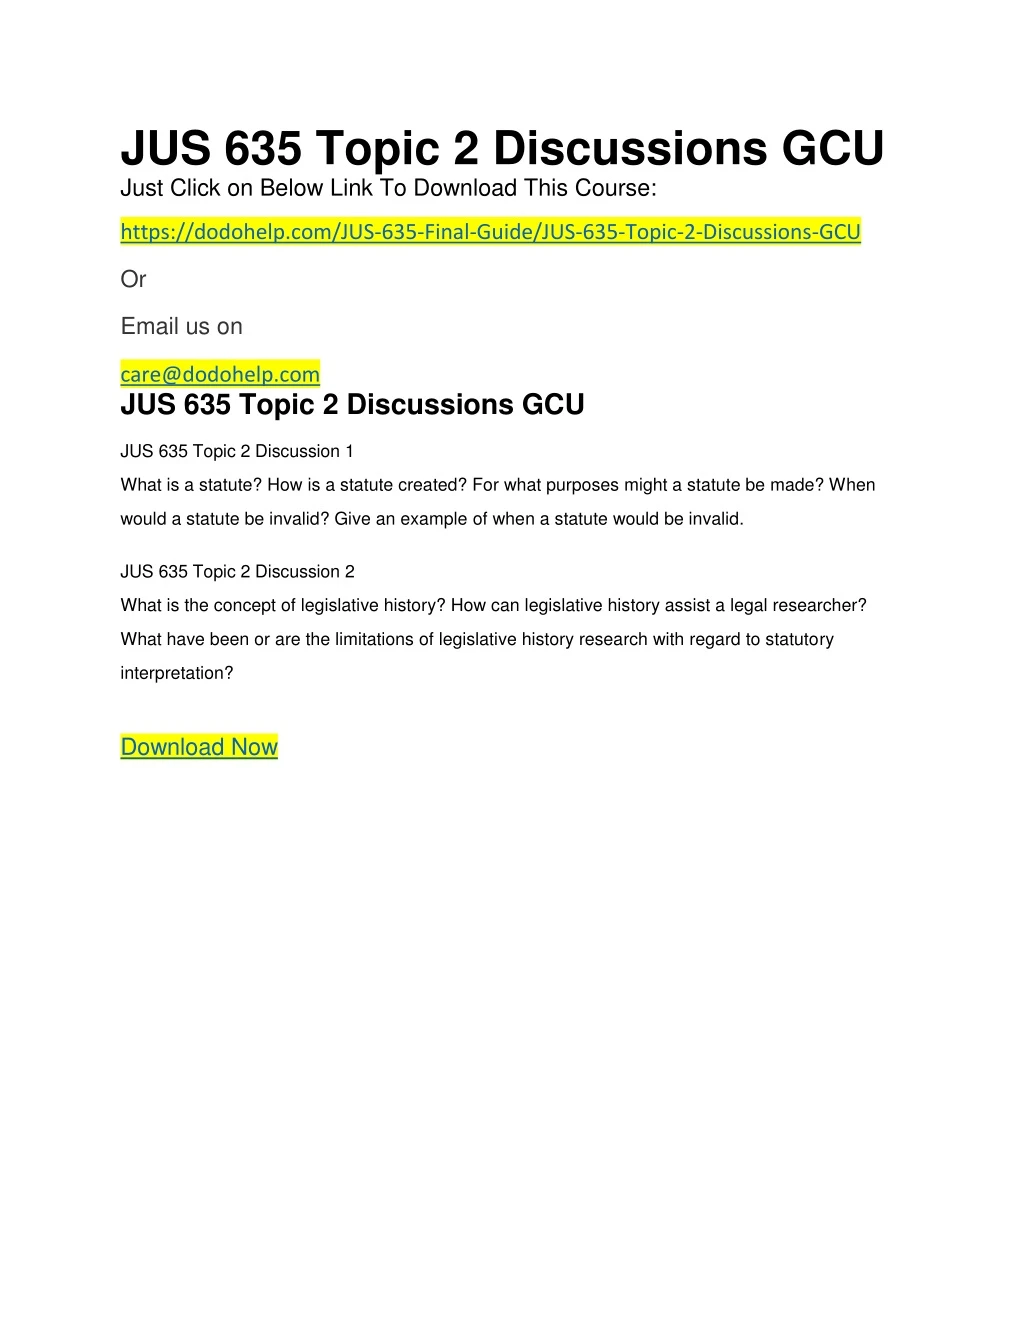 jus 635 topic 2 discussions gcu just click